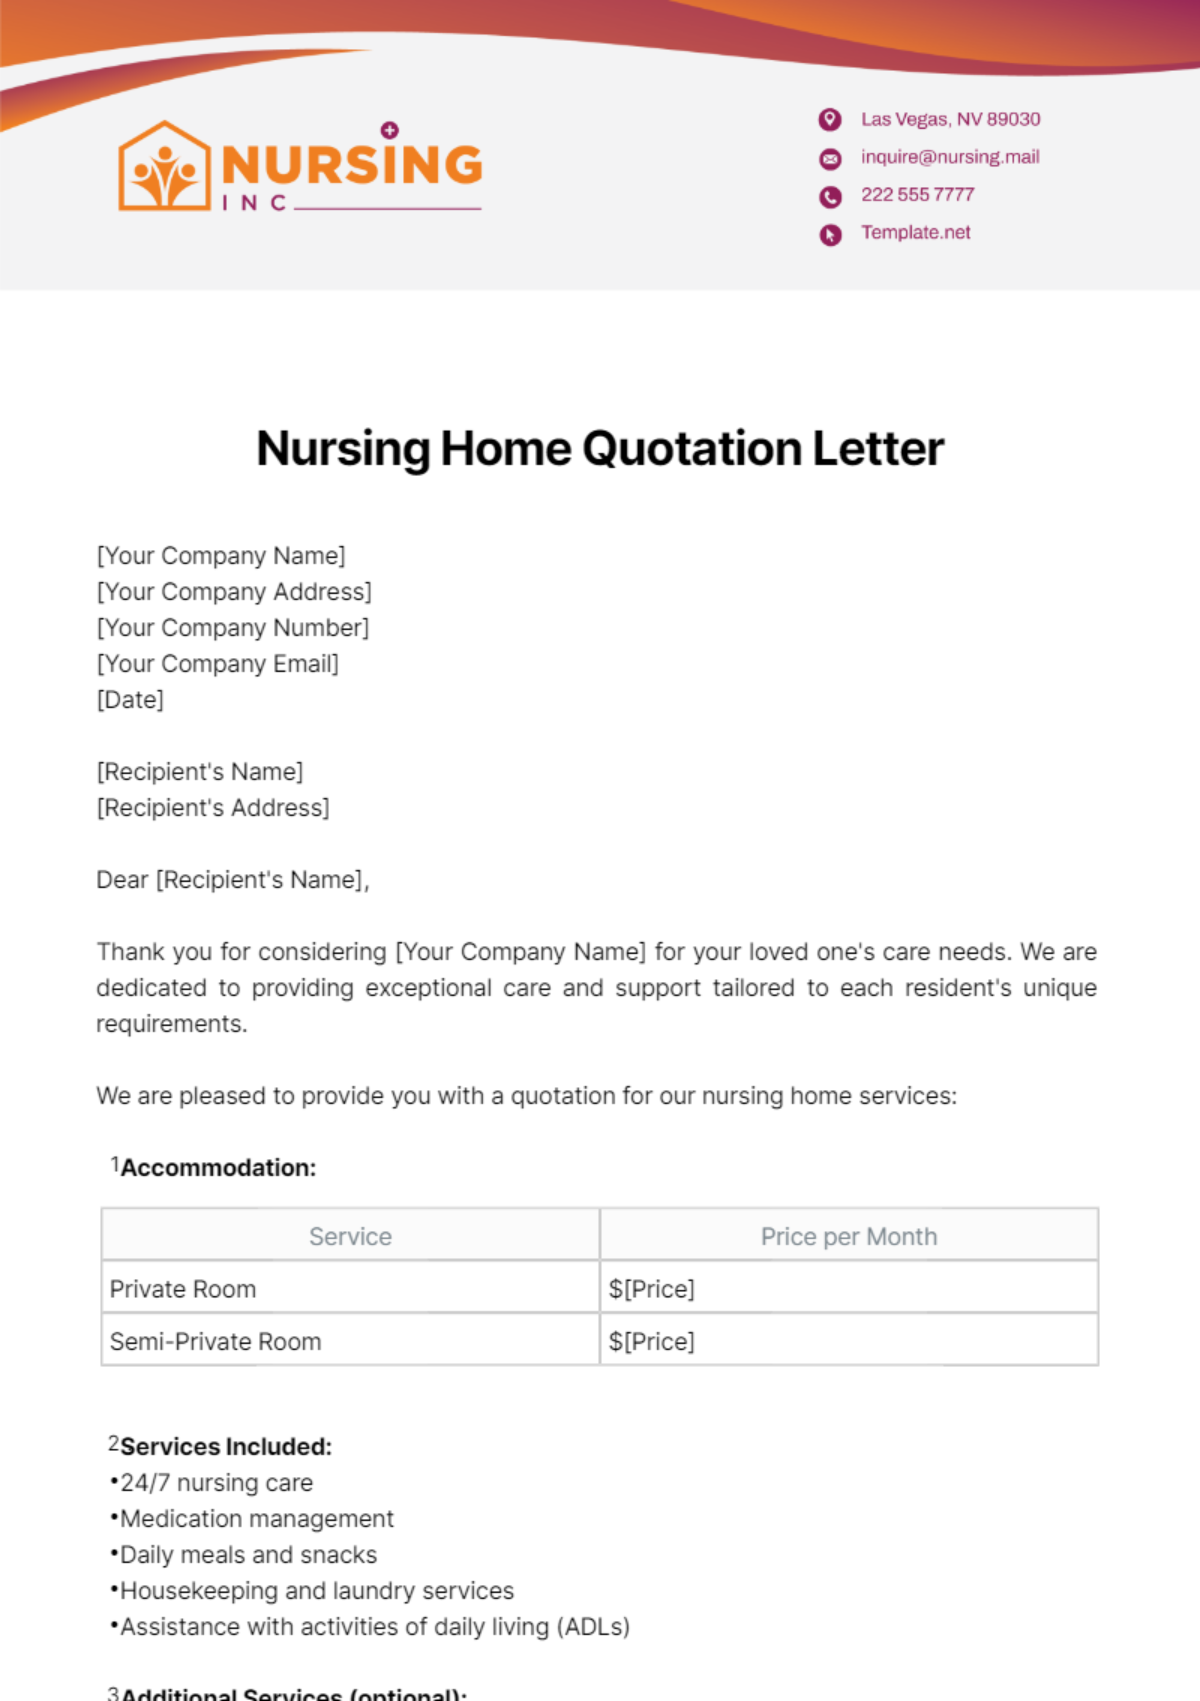 Nursing Home Quotation Letter Template